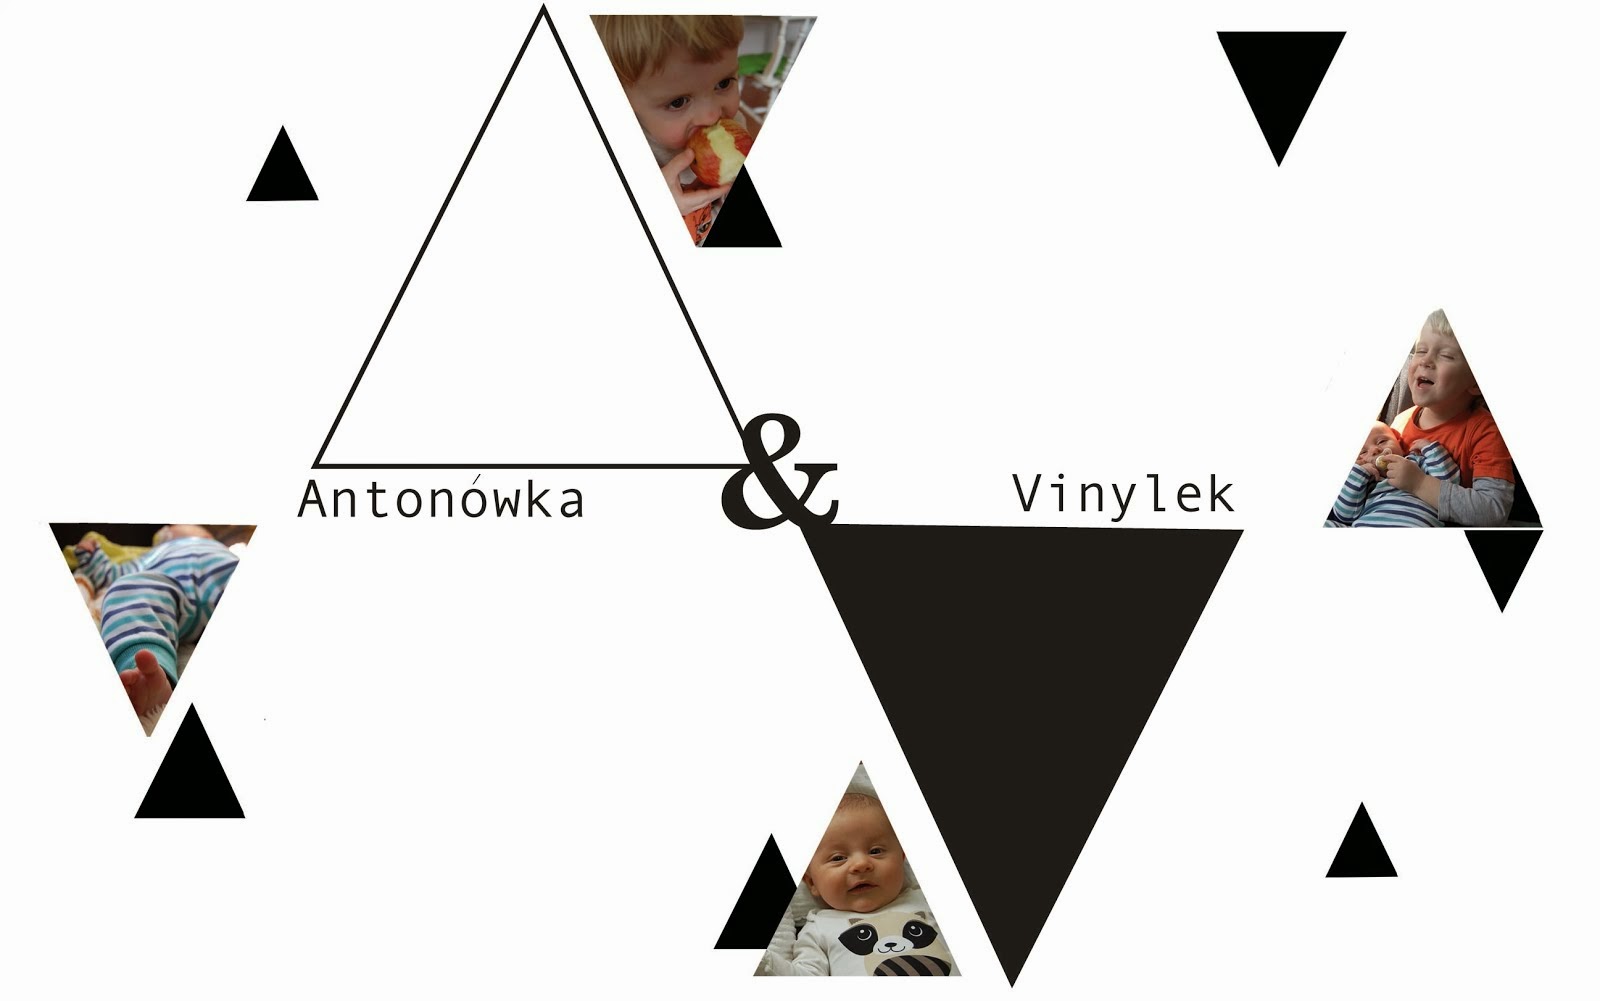 Antonowka & Vinylek